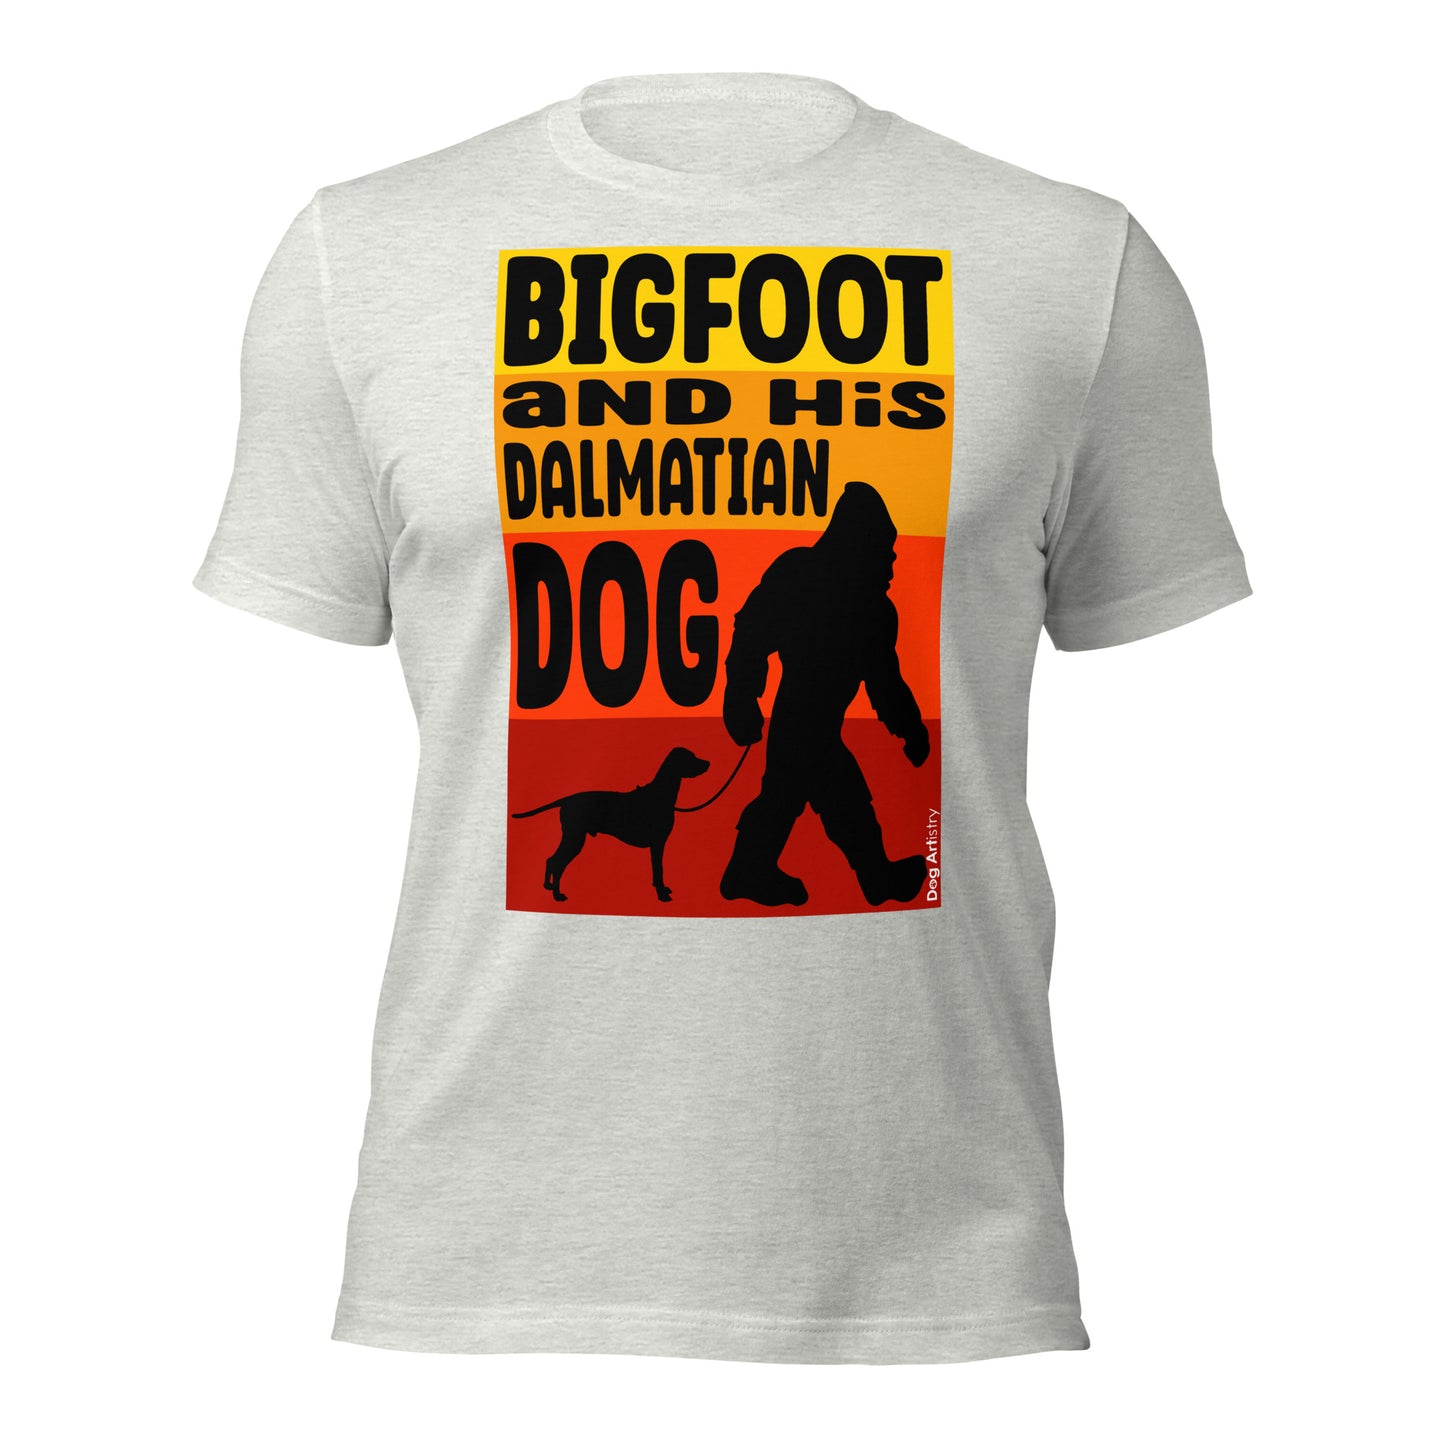 Bigfoot and his Dalmatian dog unisex ash t-shirt by Dog Artistry.